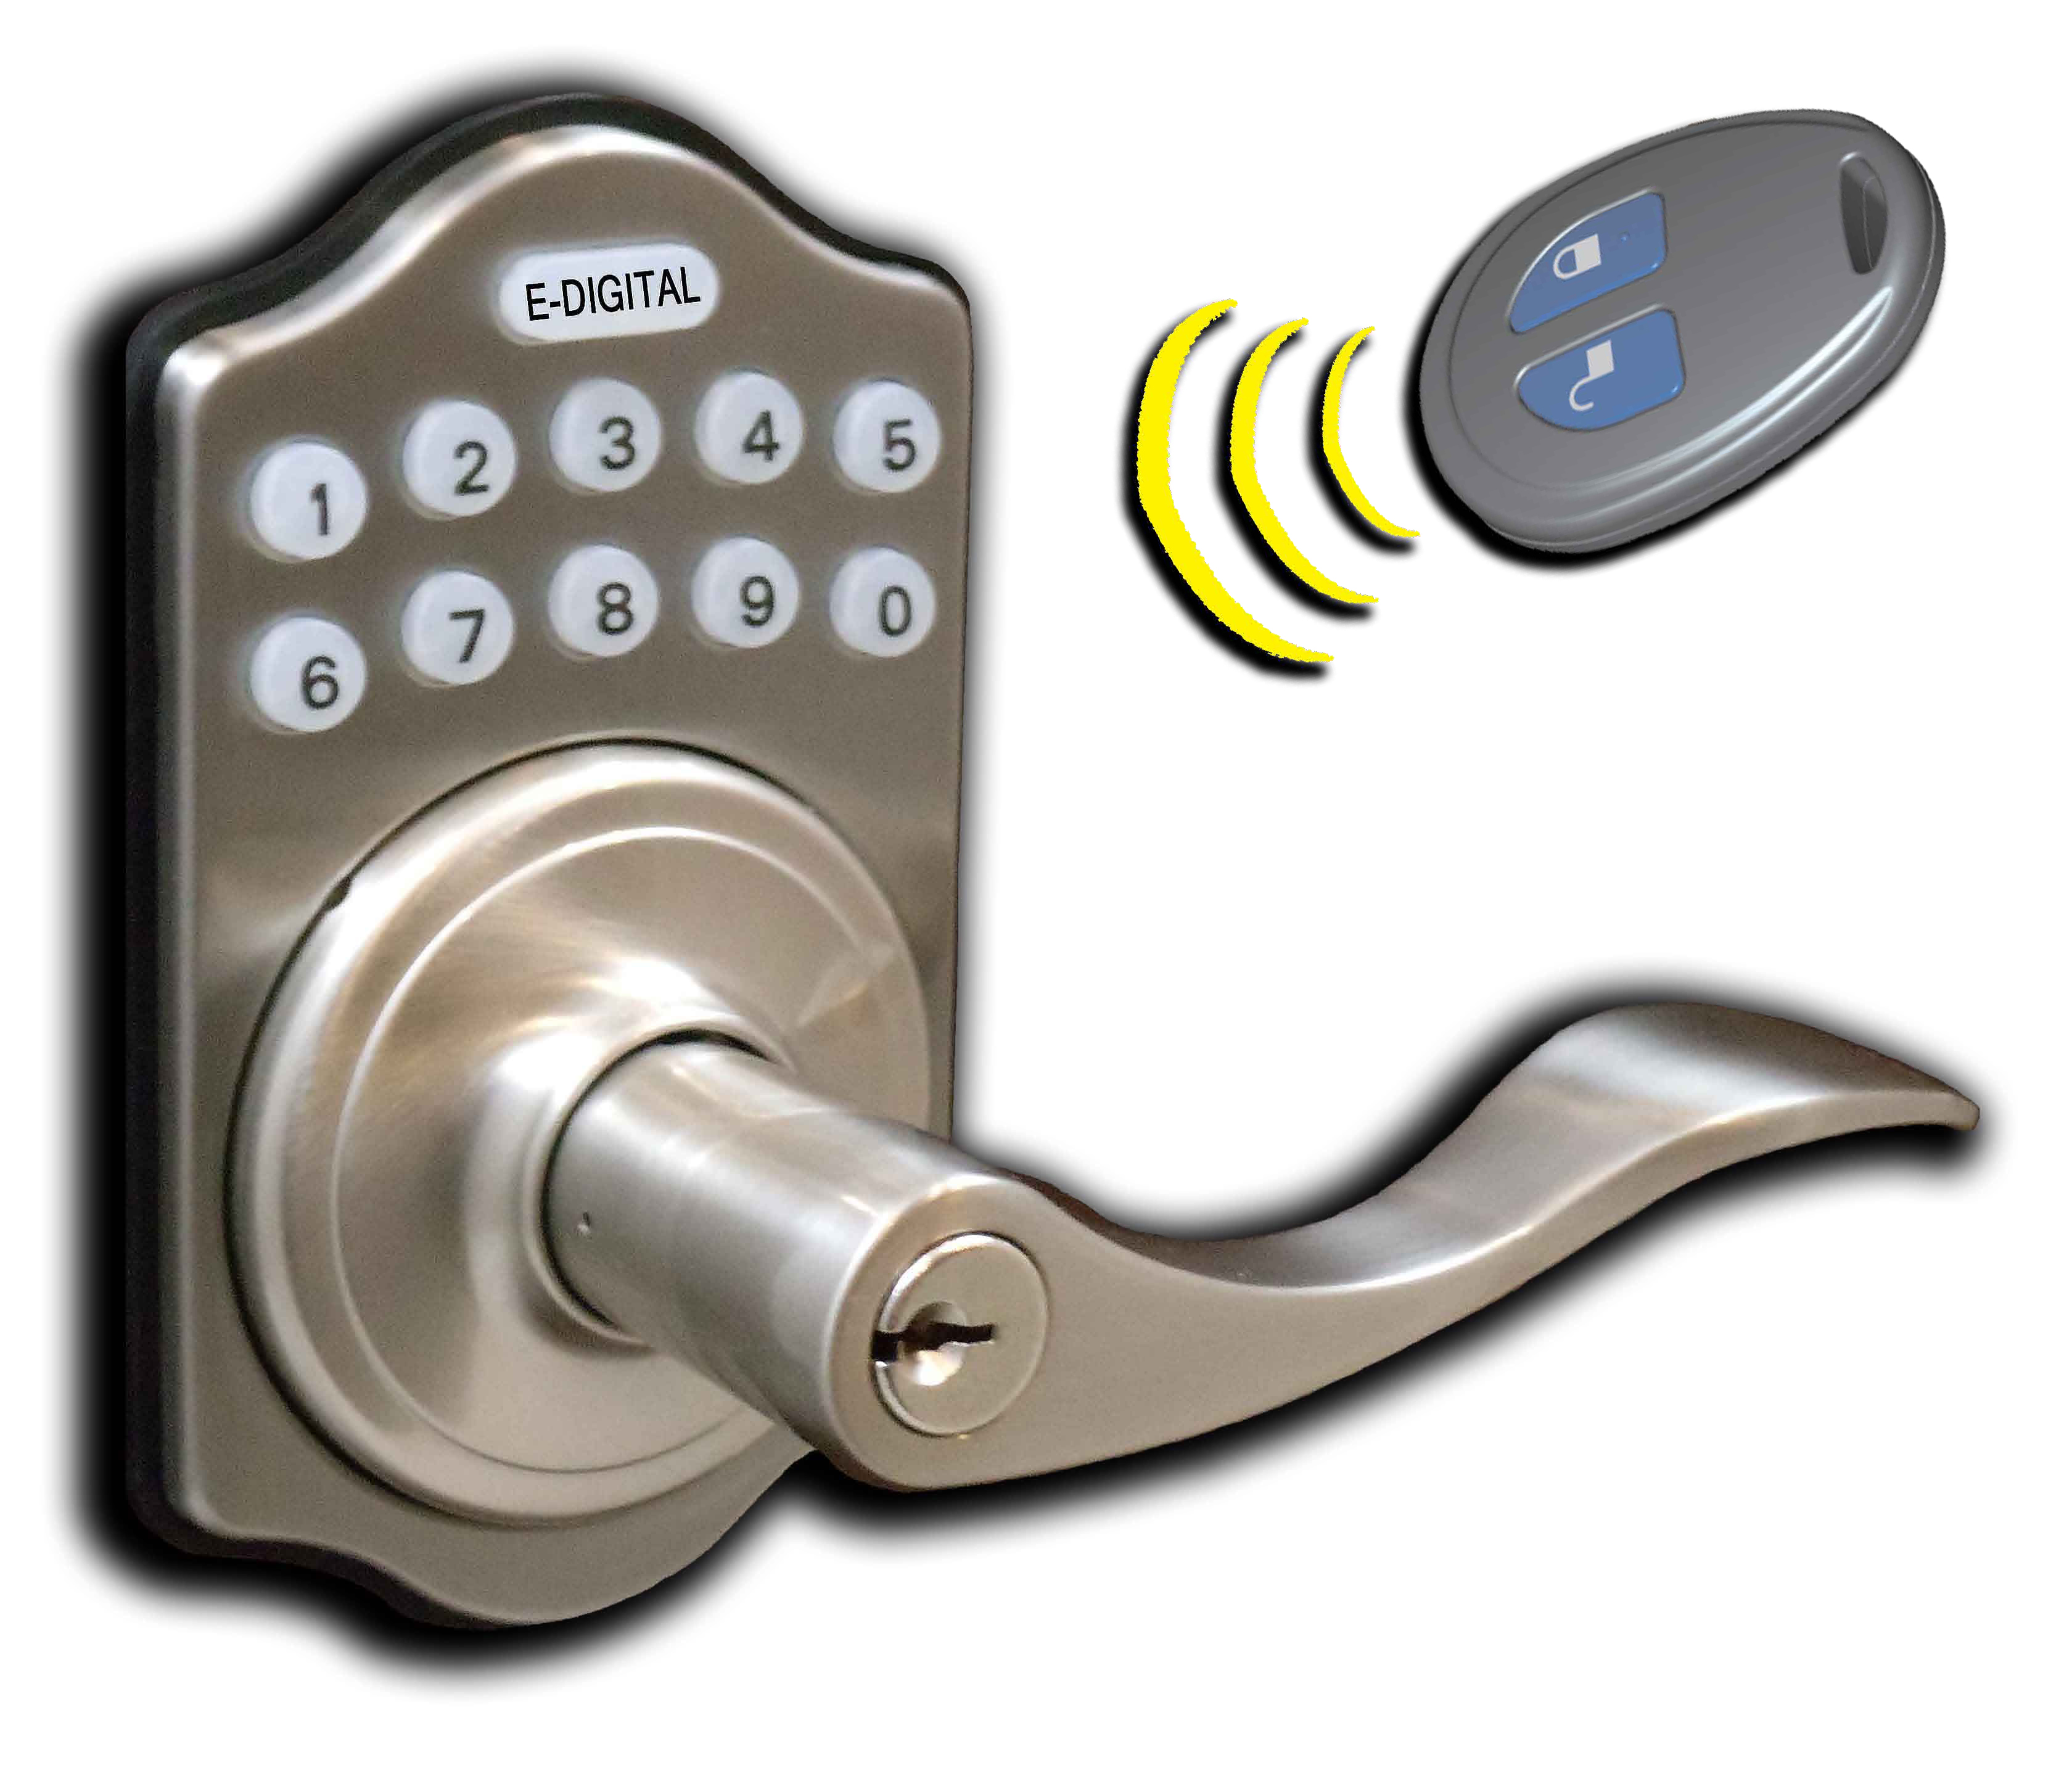 Key Fob for E-Digital Lock